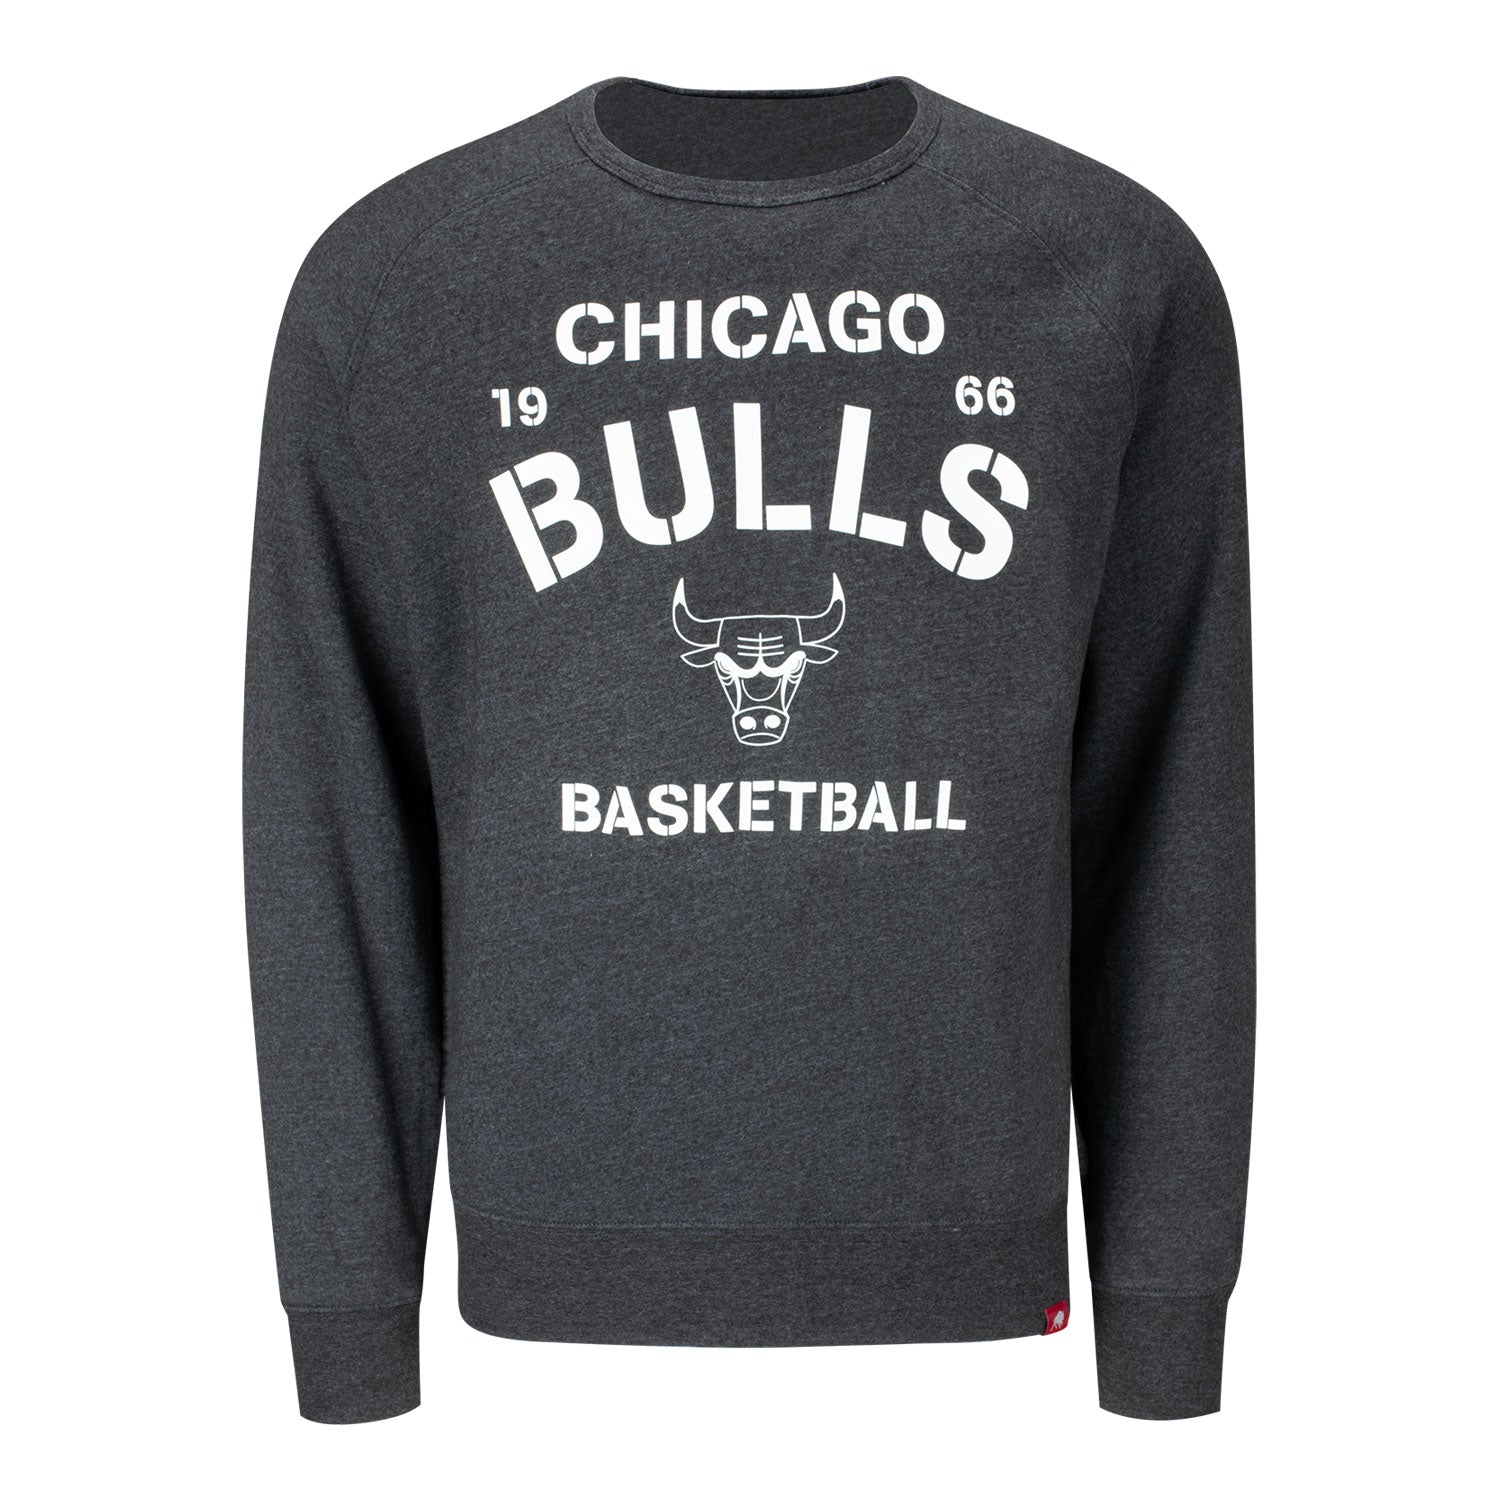 bull shirt sweatshirt